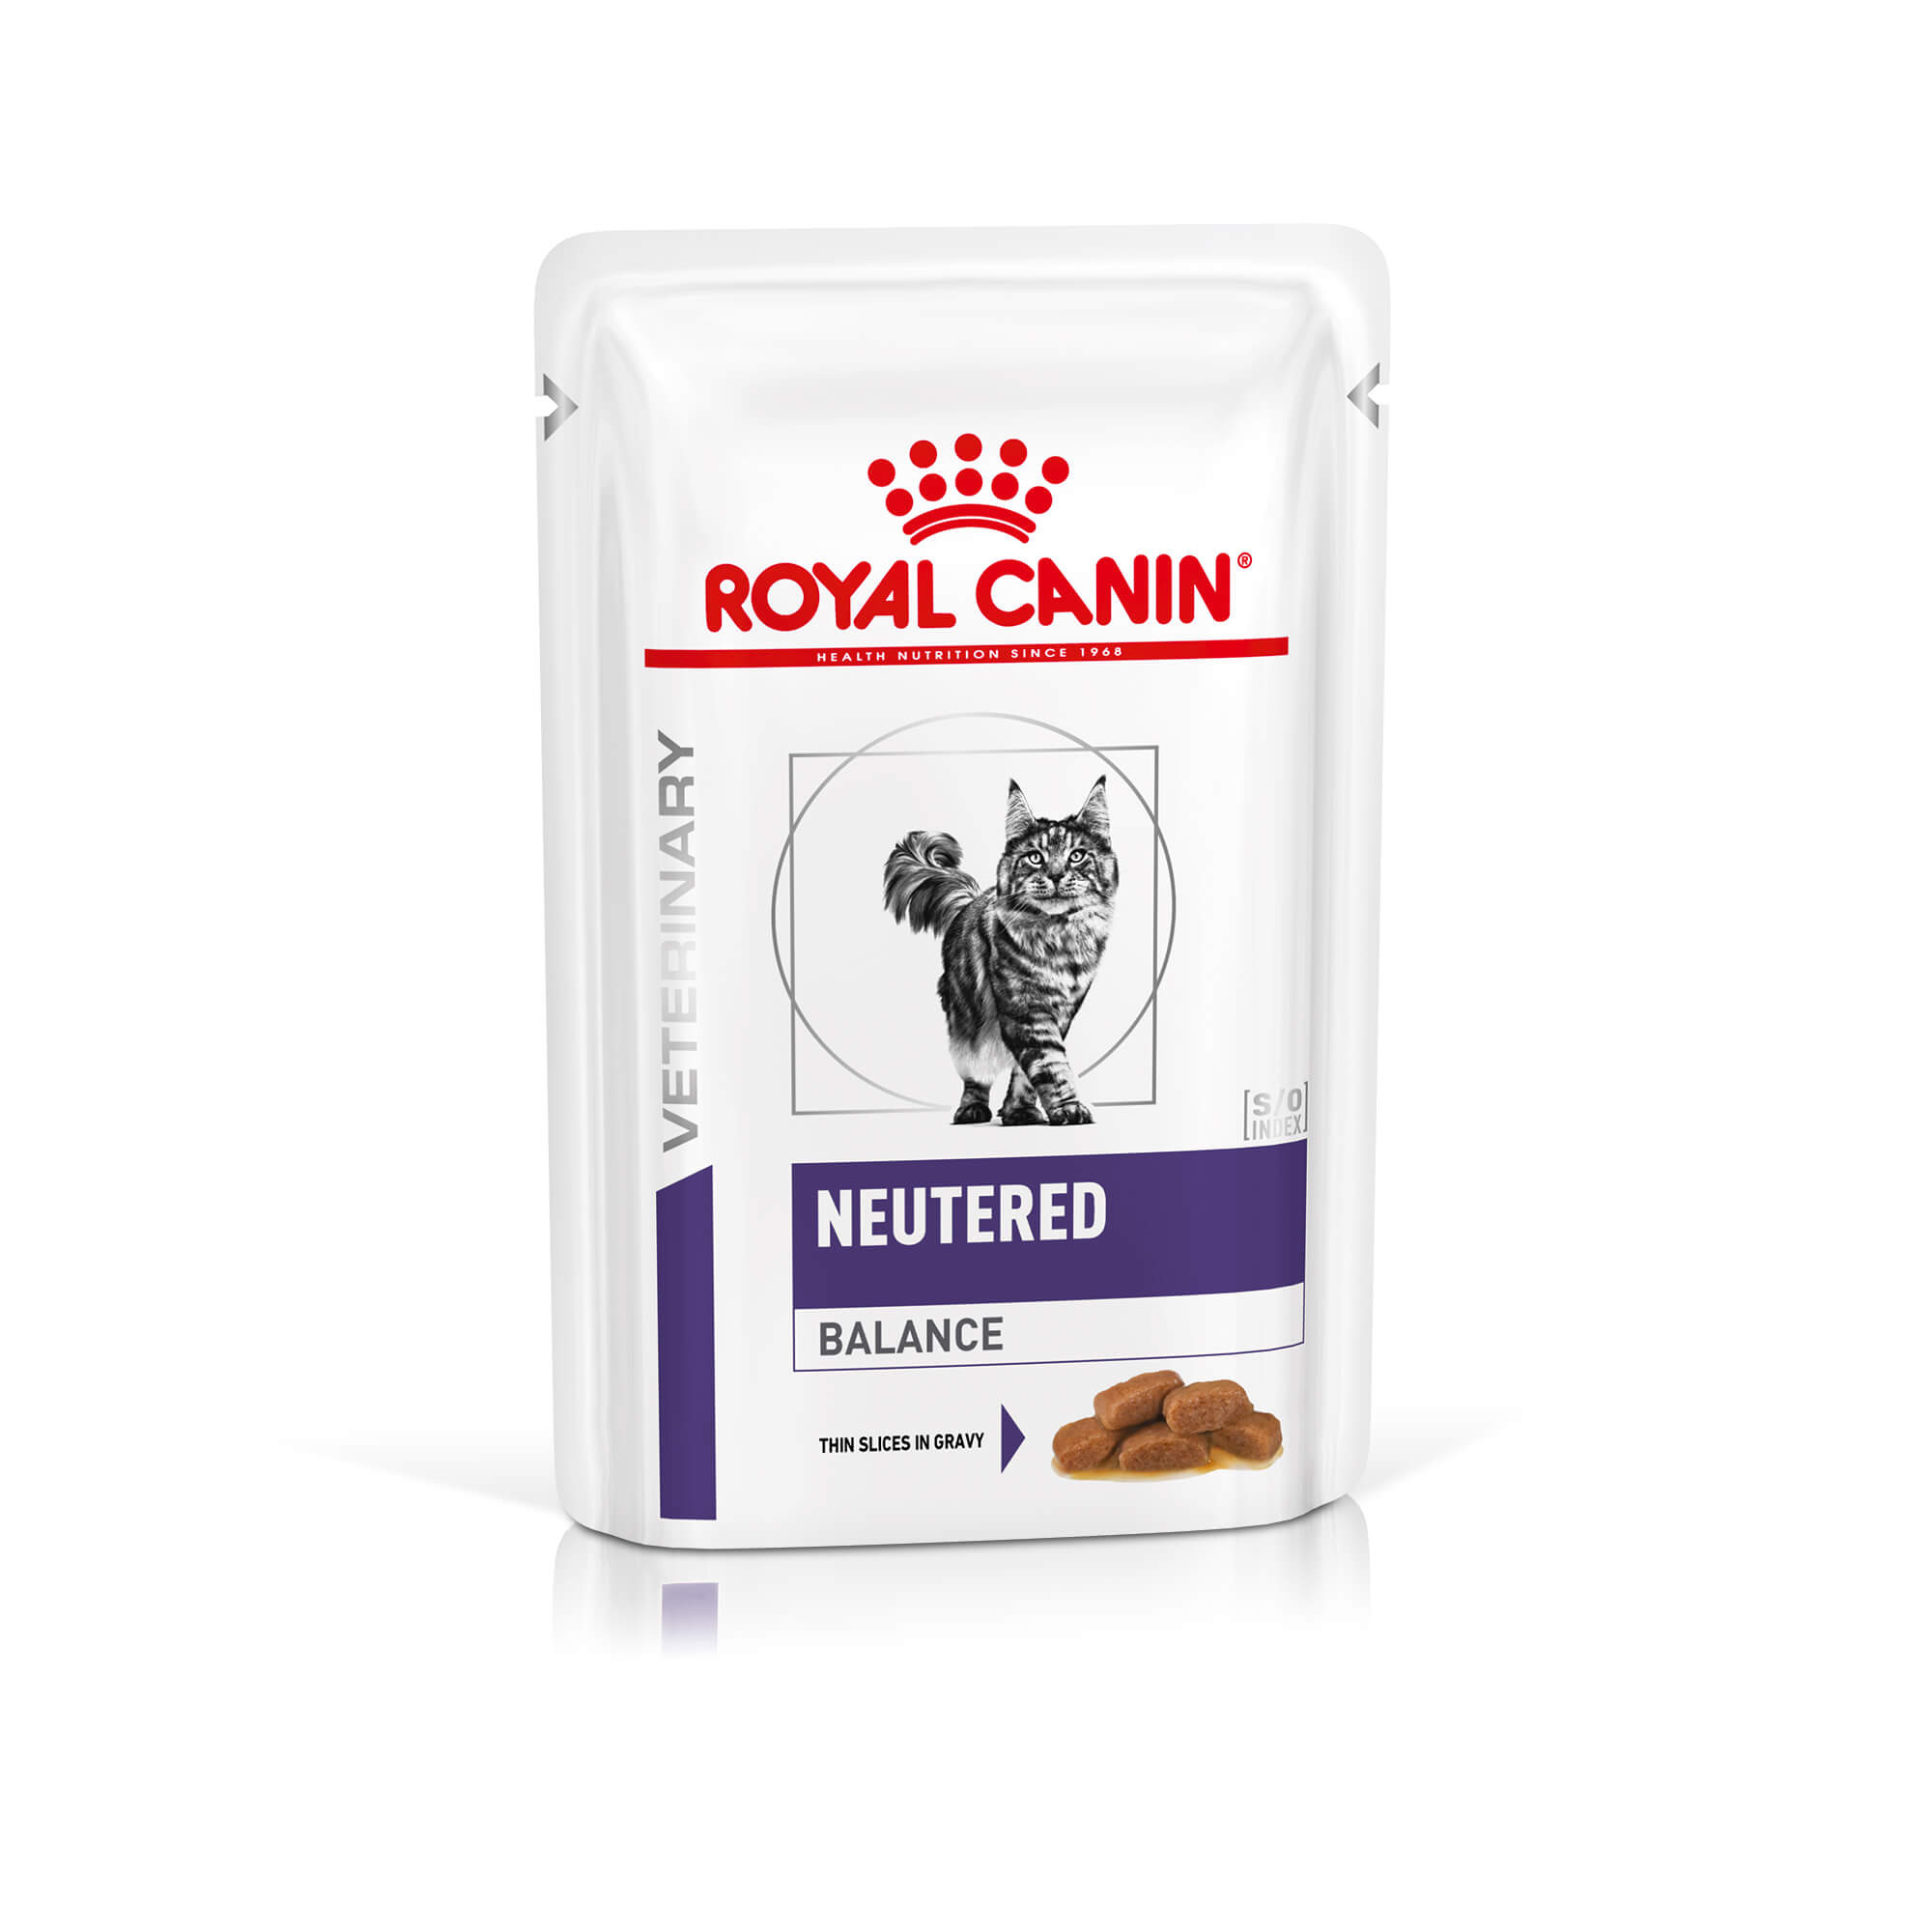 Royal Canin Veterinary Neutered Balance pâtée pour chat (85 gr)